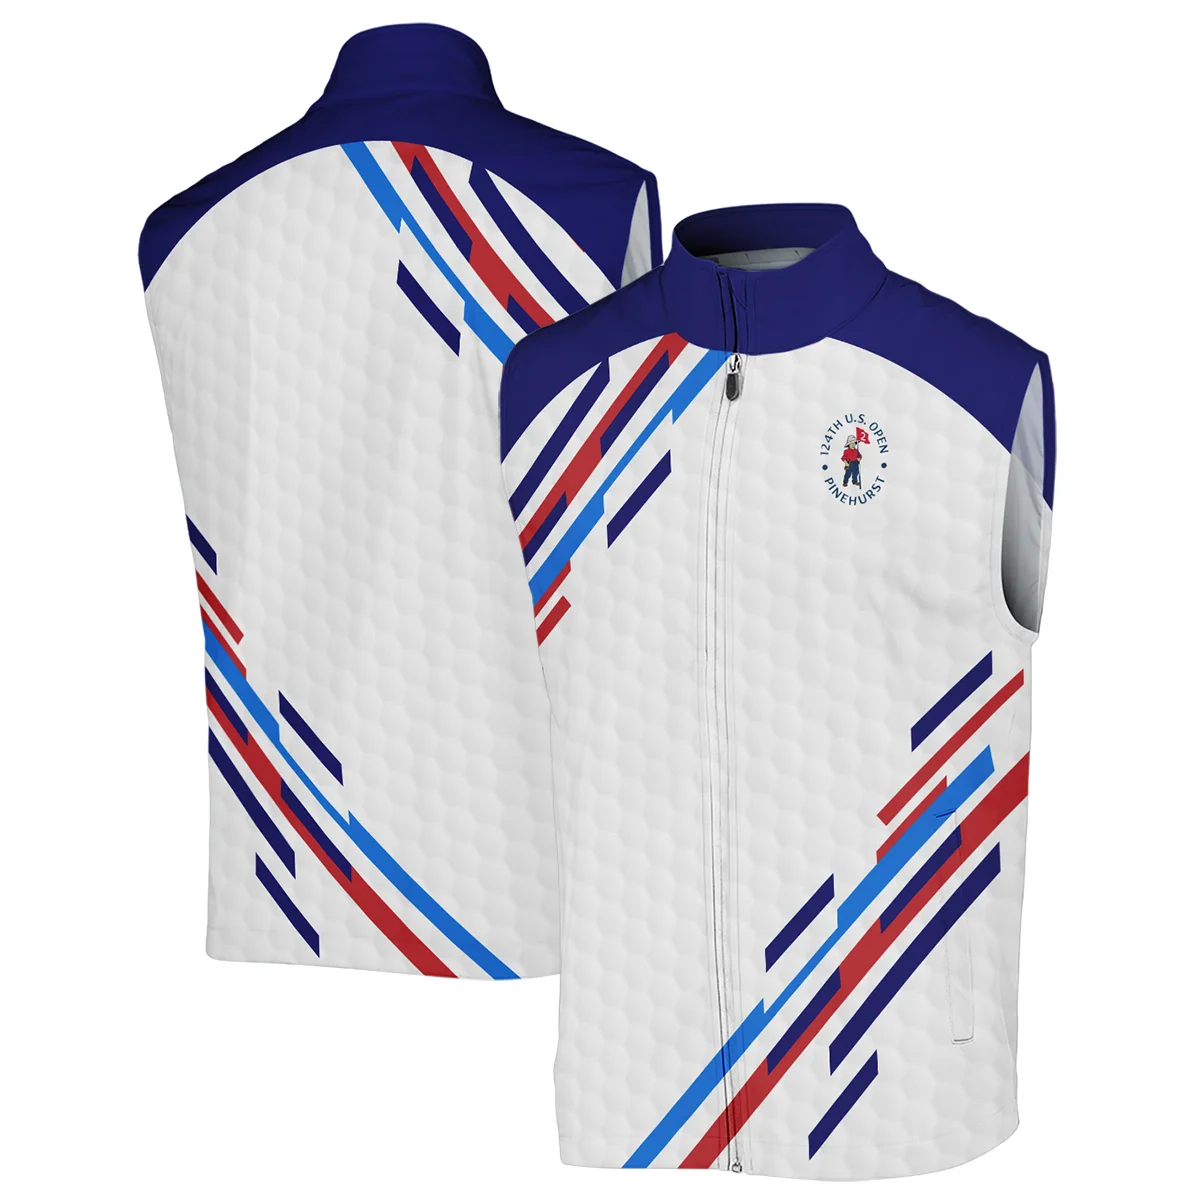 Golf Sport Callaway 124th U.S. Open Pinehurst Unisex Sweatshirt Blue Red Golf Pattern White All Over Print Sweatshirt